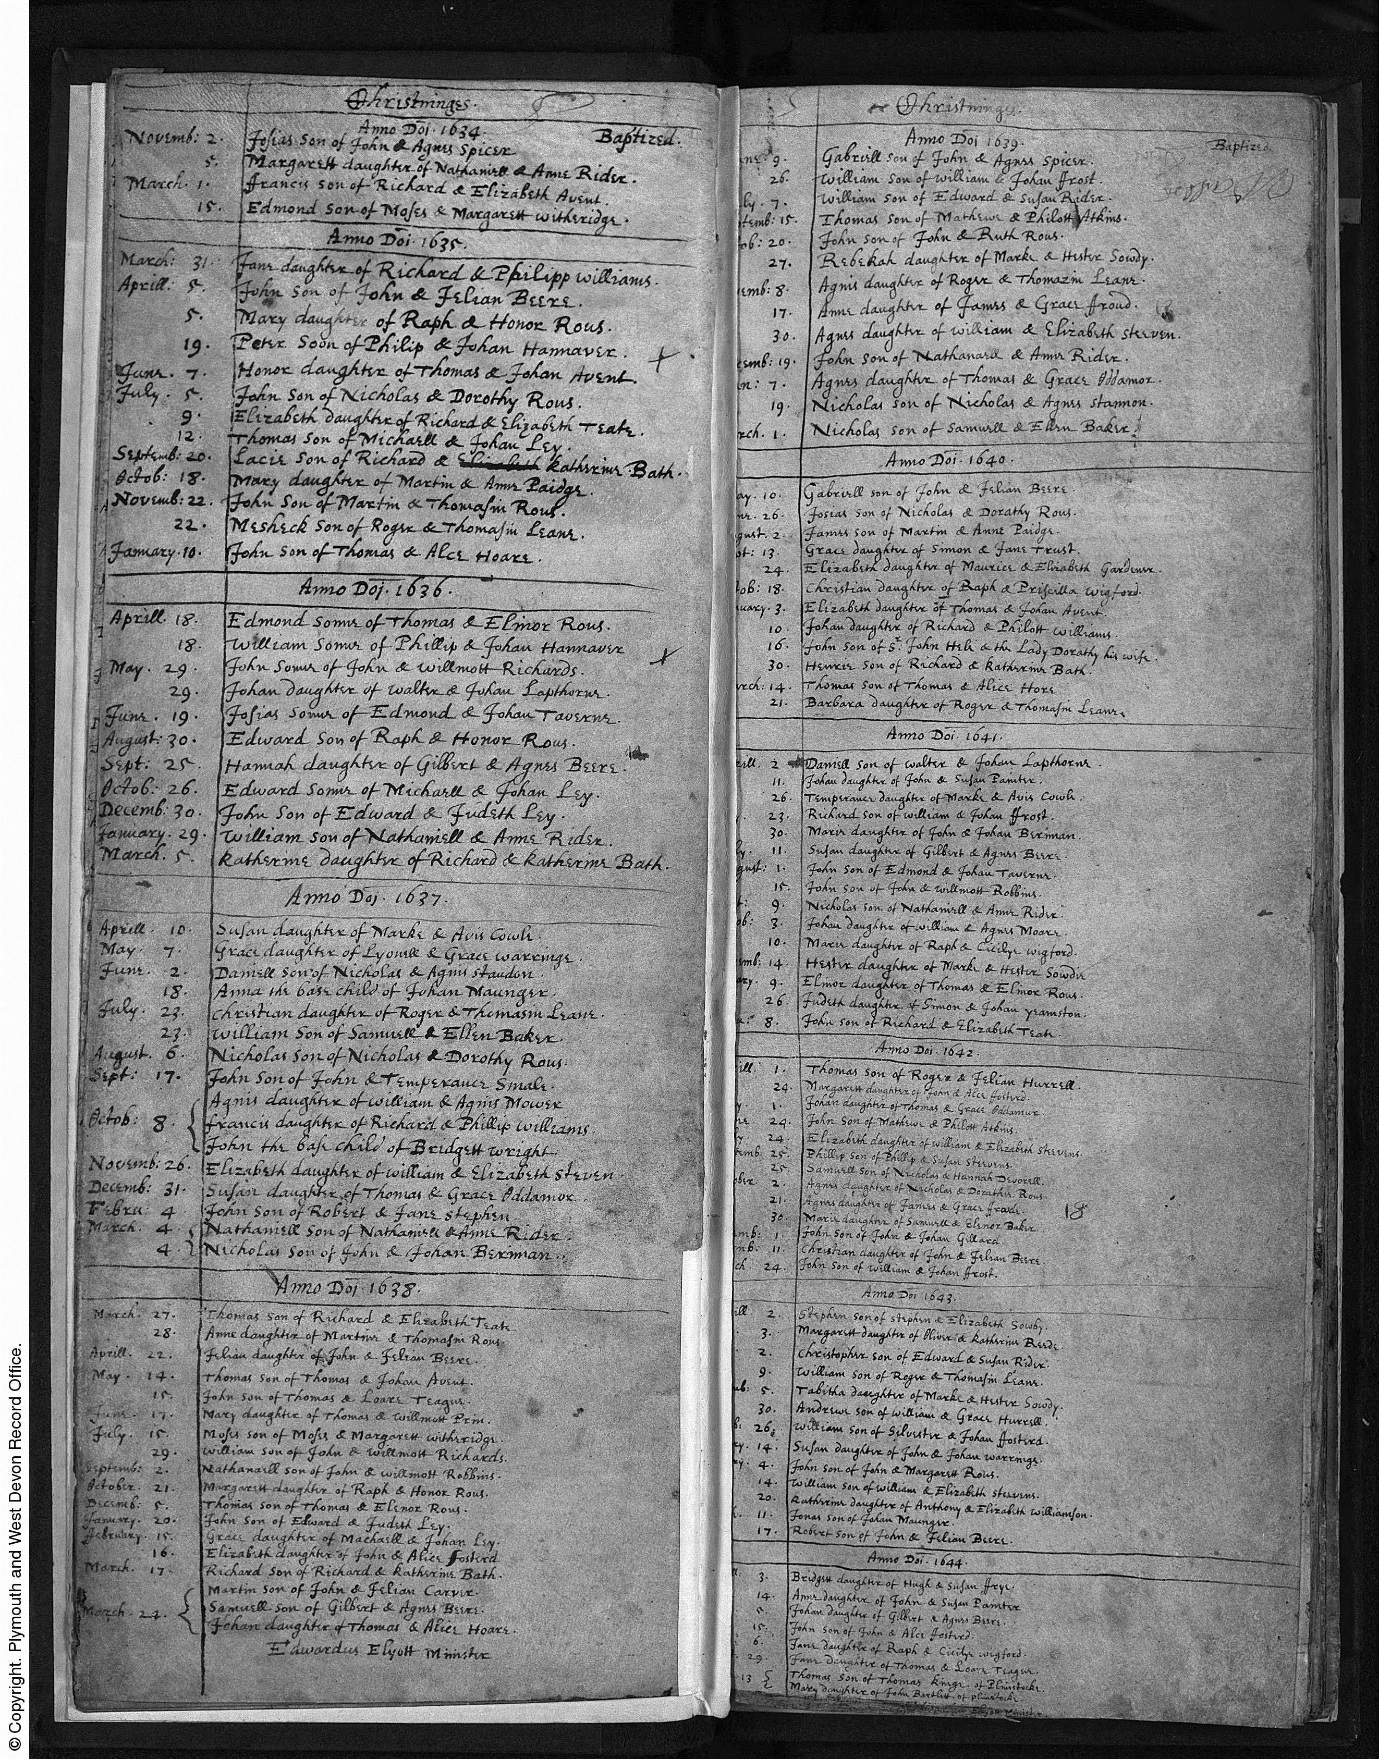 C:\Users\Virginia Rundle\Documents\Ancestry\Northey Moar Files\Galsworthy\Baptism of Jelian Beere April 22 1638 Wembury.jpg